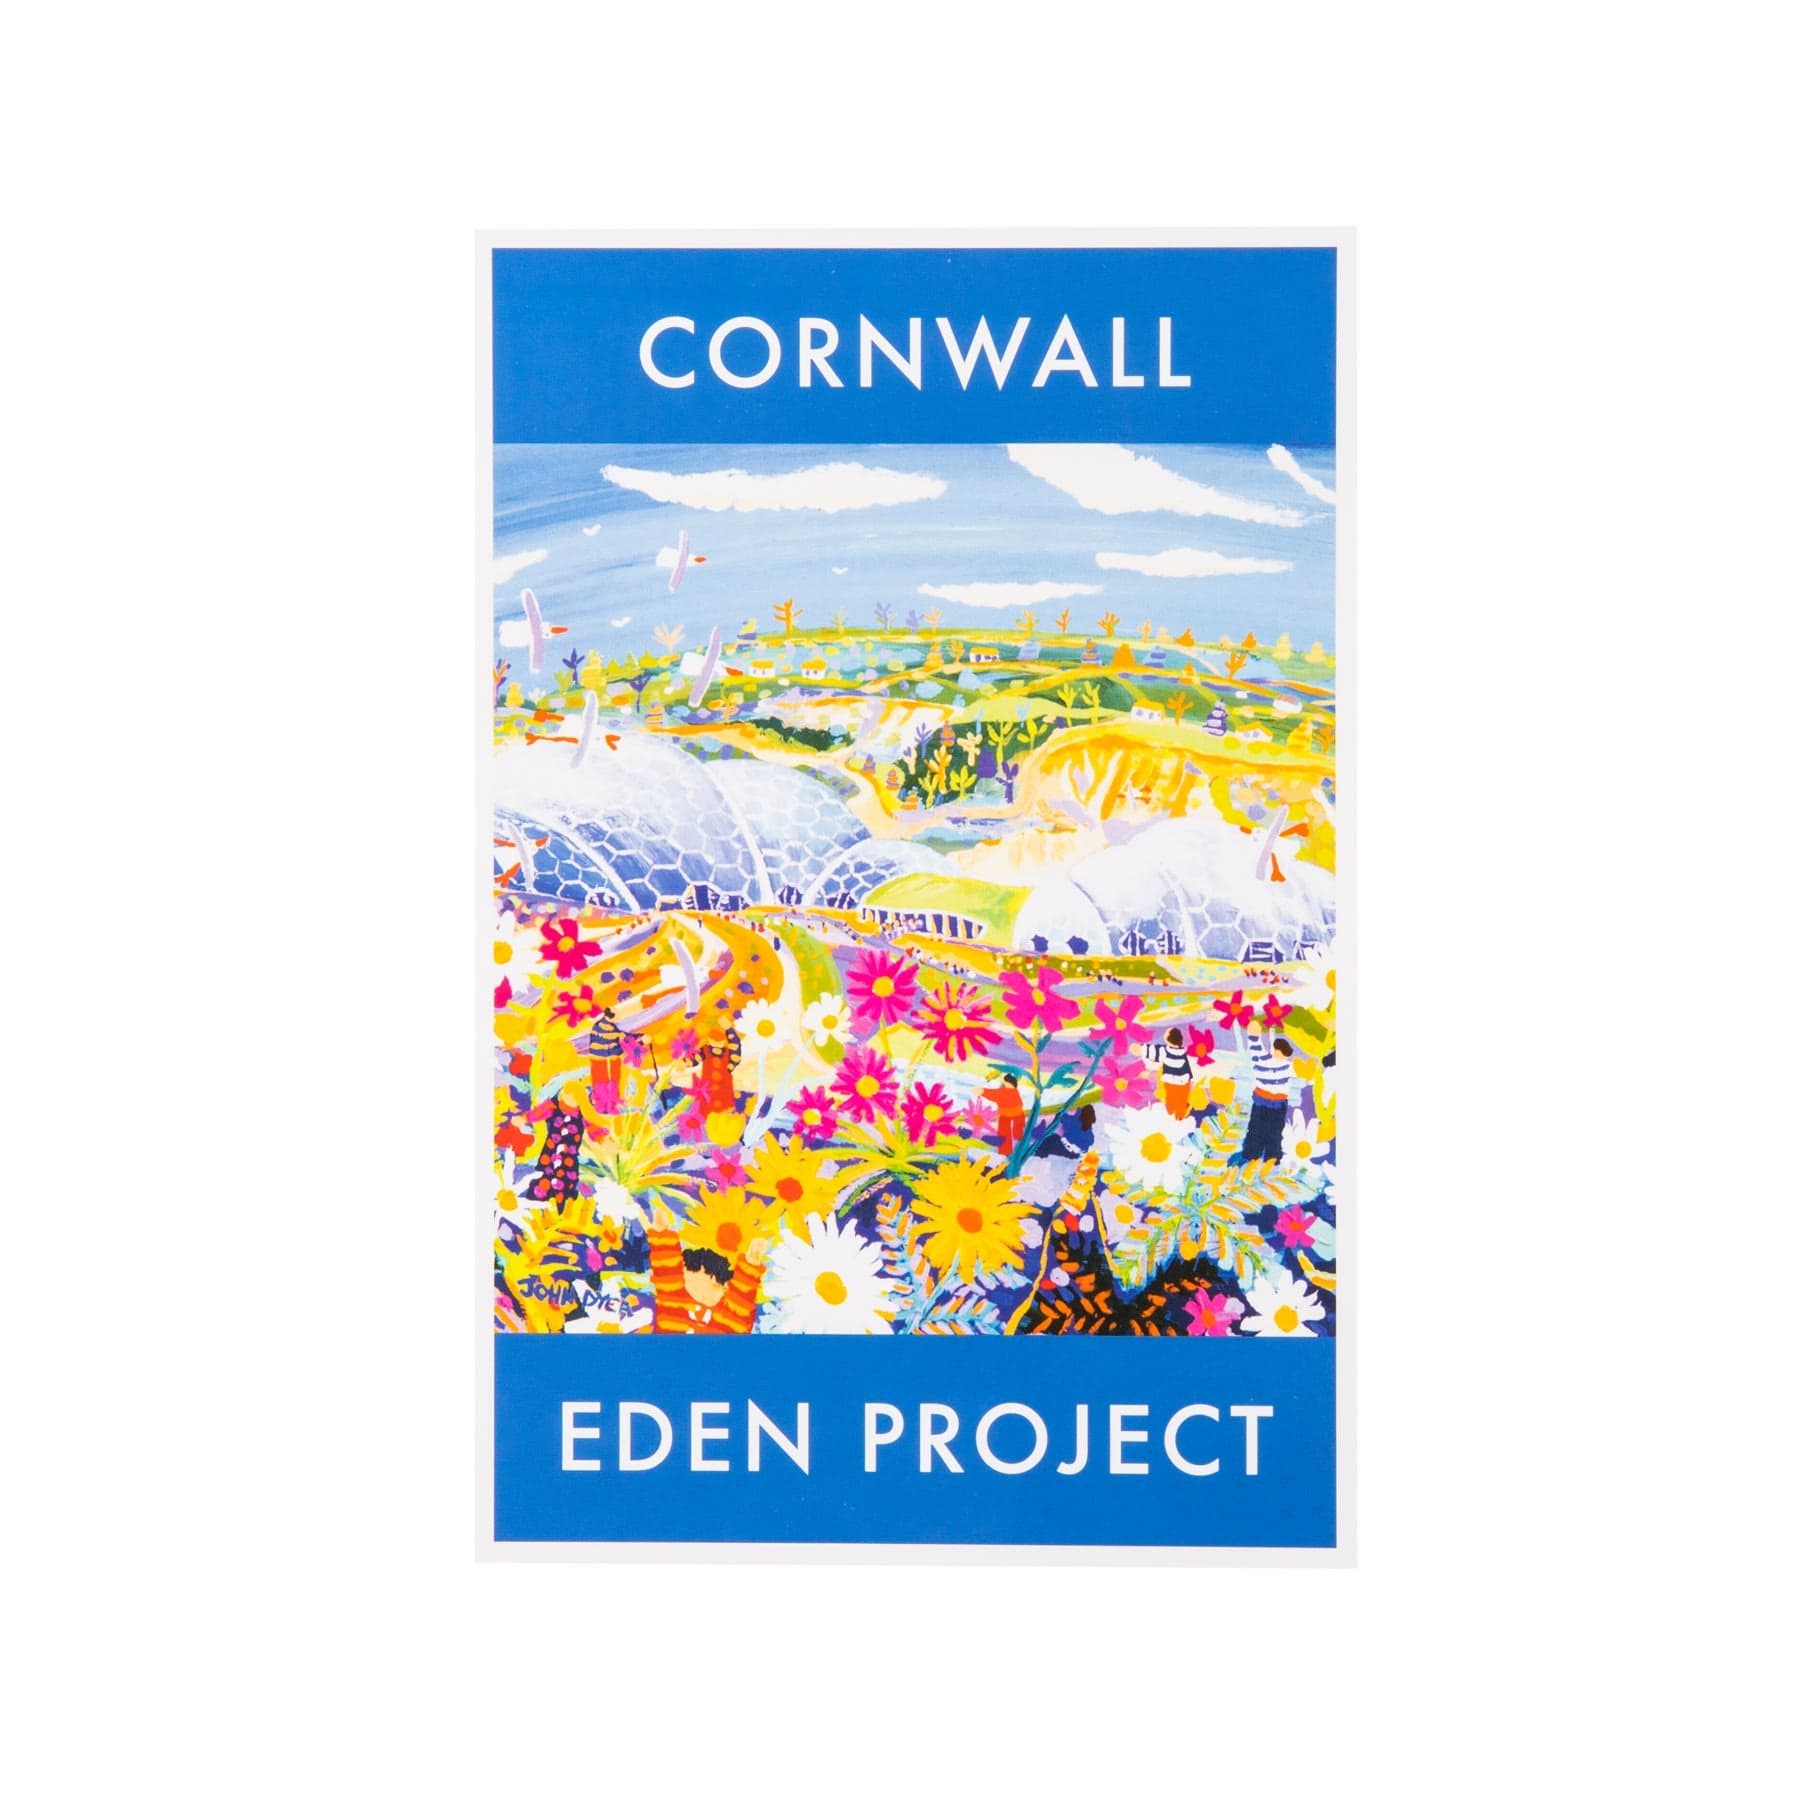 Eden Project wild cornwall postcard